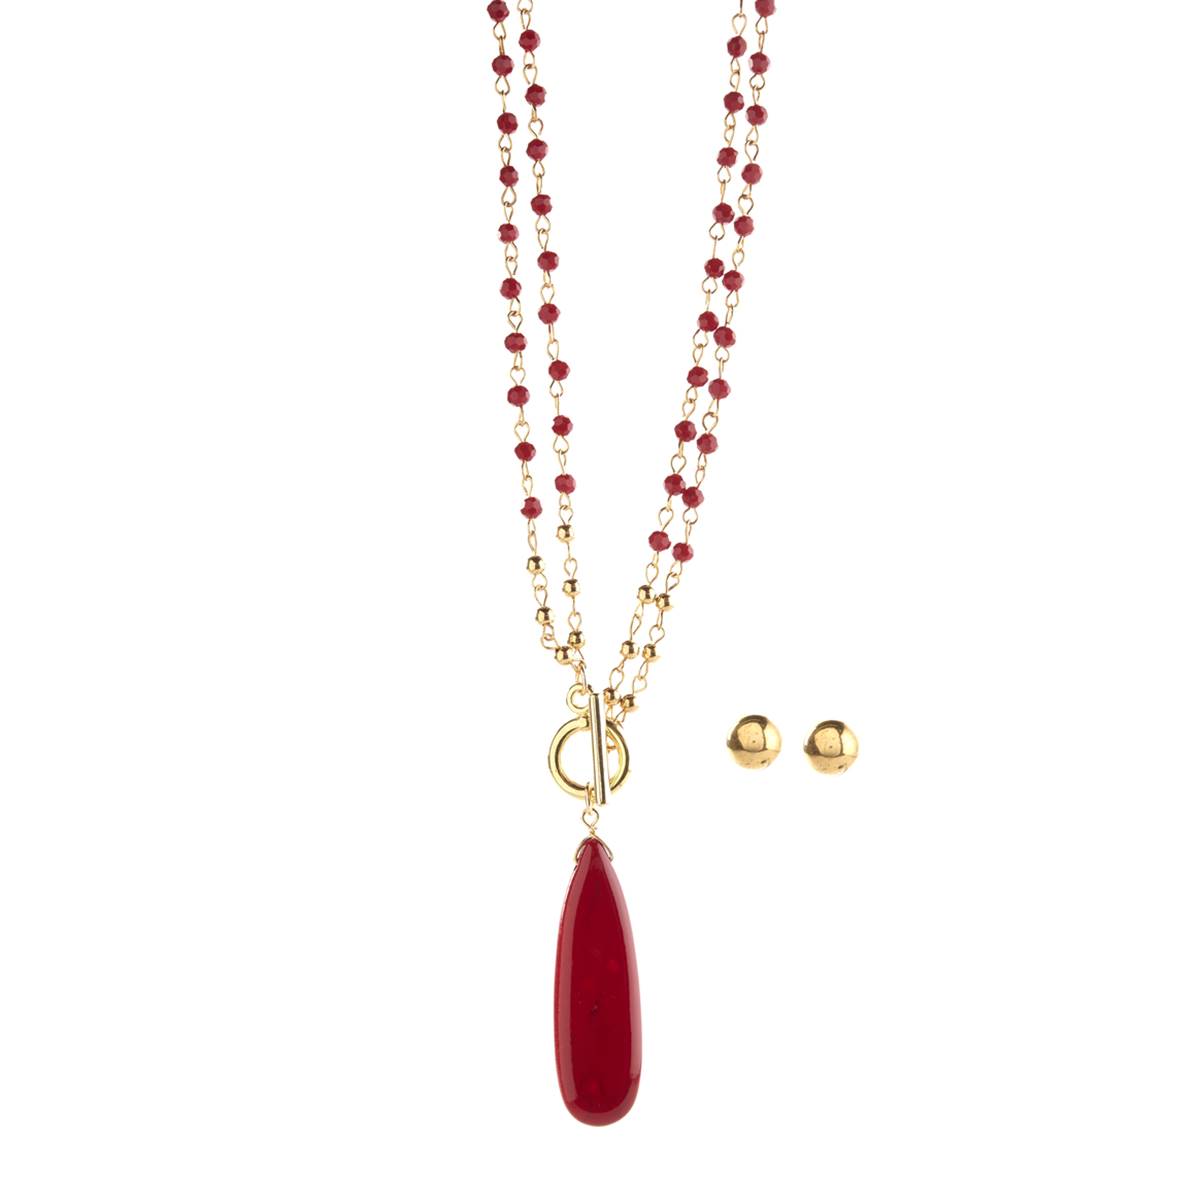 Ashley Cooper(tm) Wine Beads & Semiprecious Pendant & Earrings